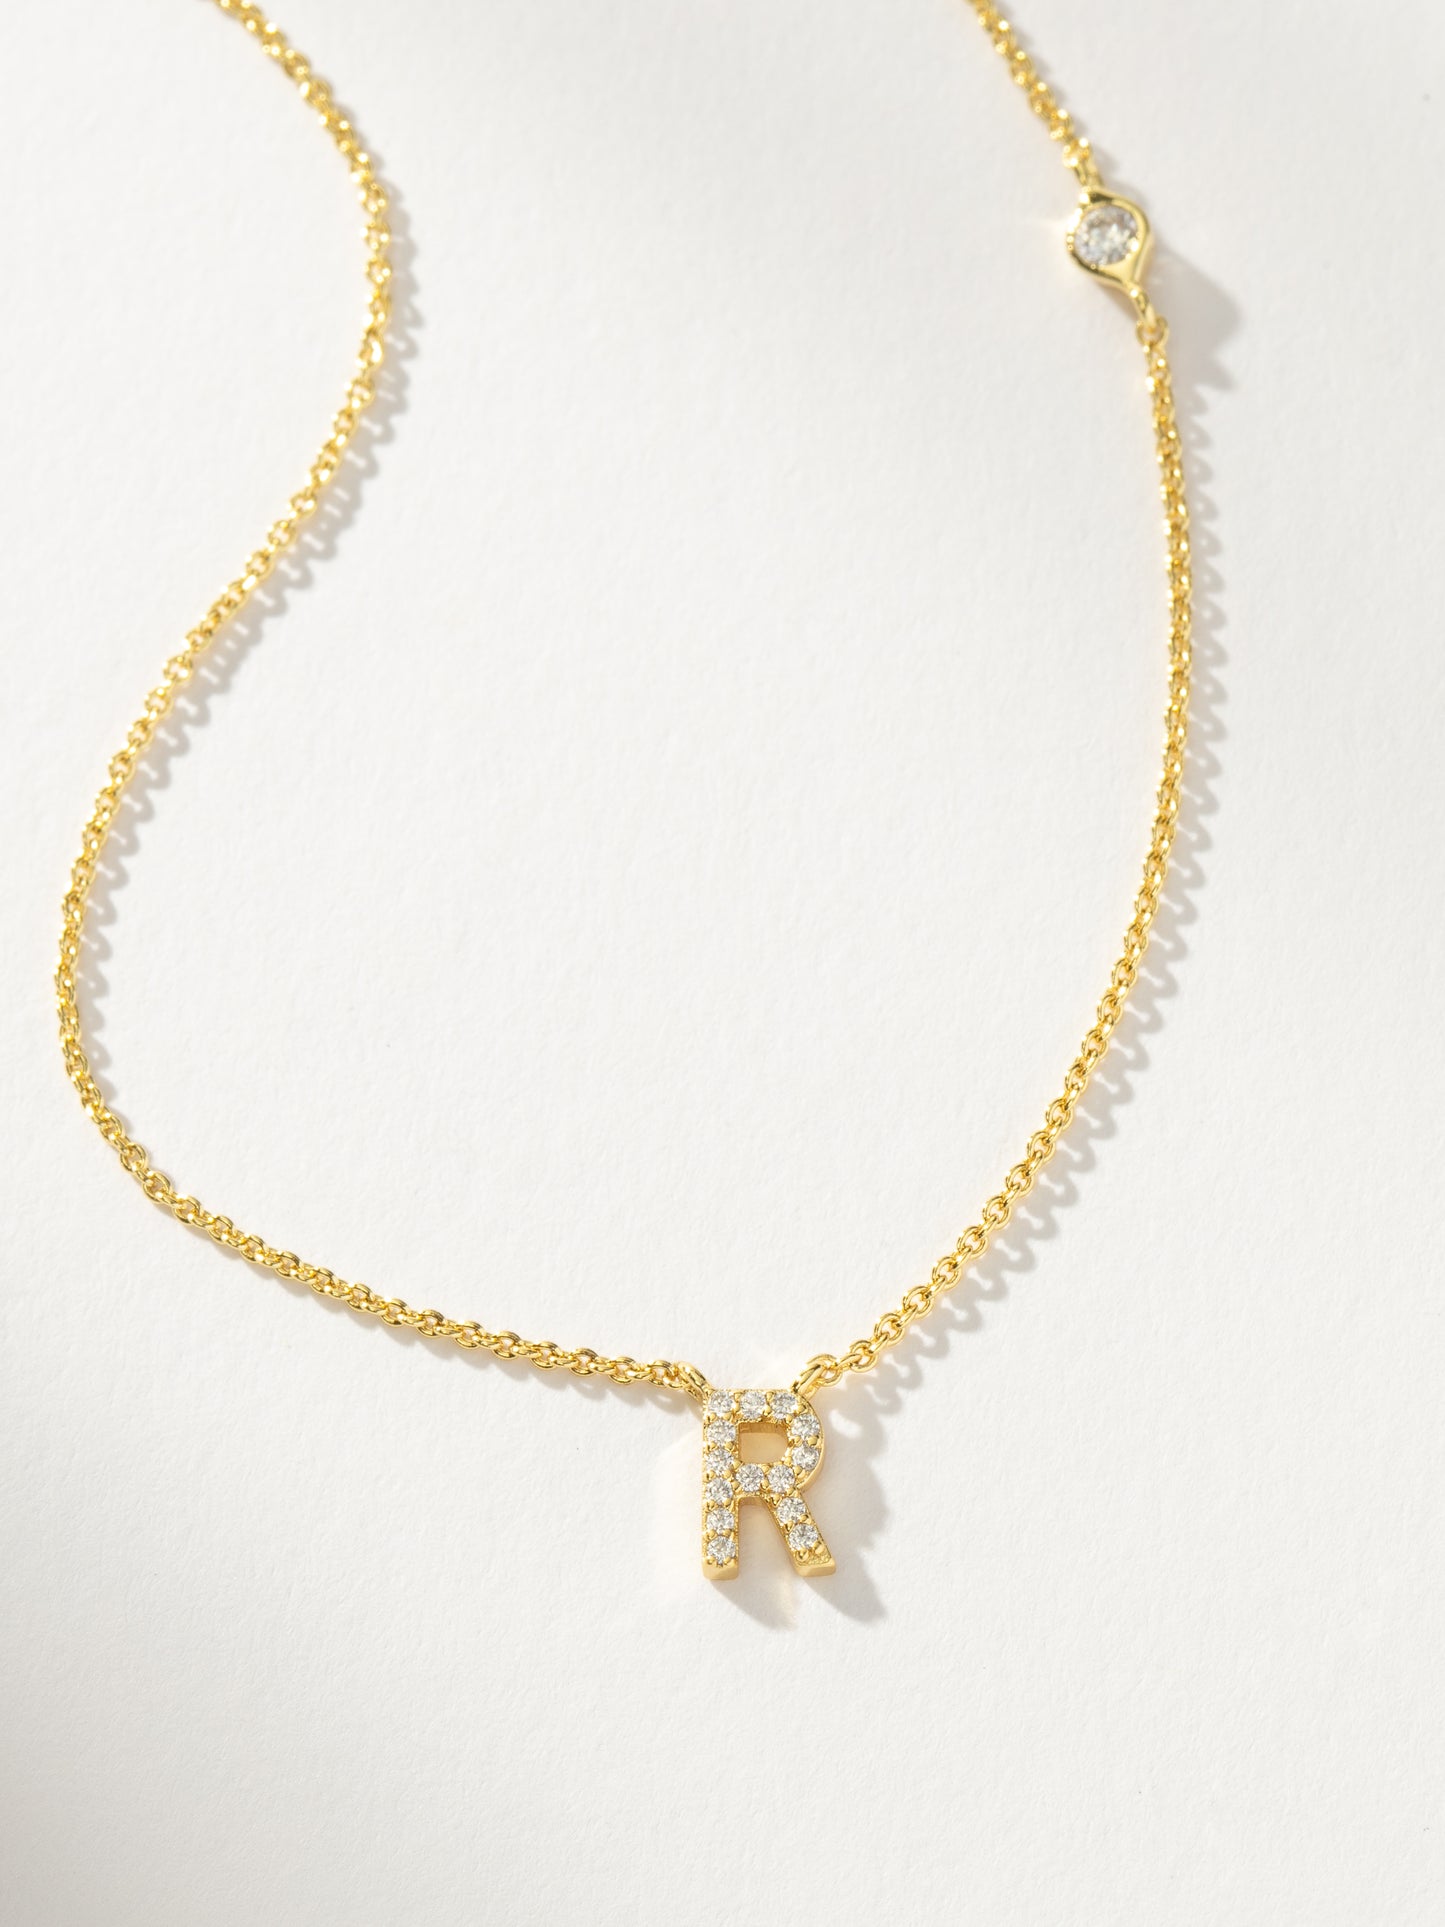 Pavé Initial Necklace | Gold R | Product Detail Image | Uncommon James